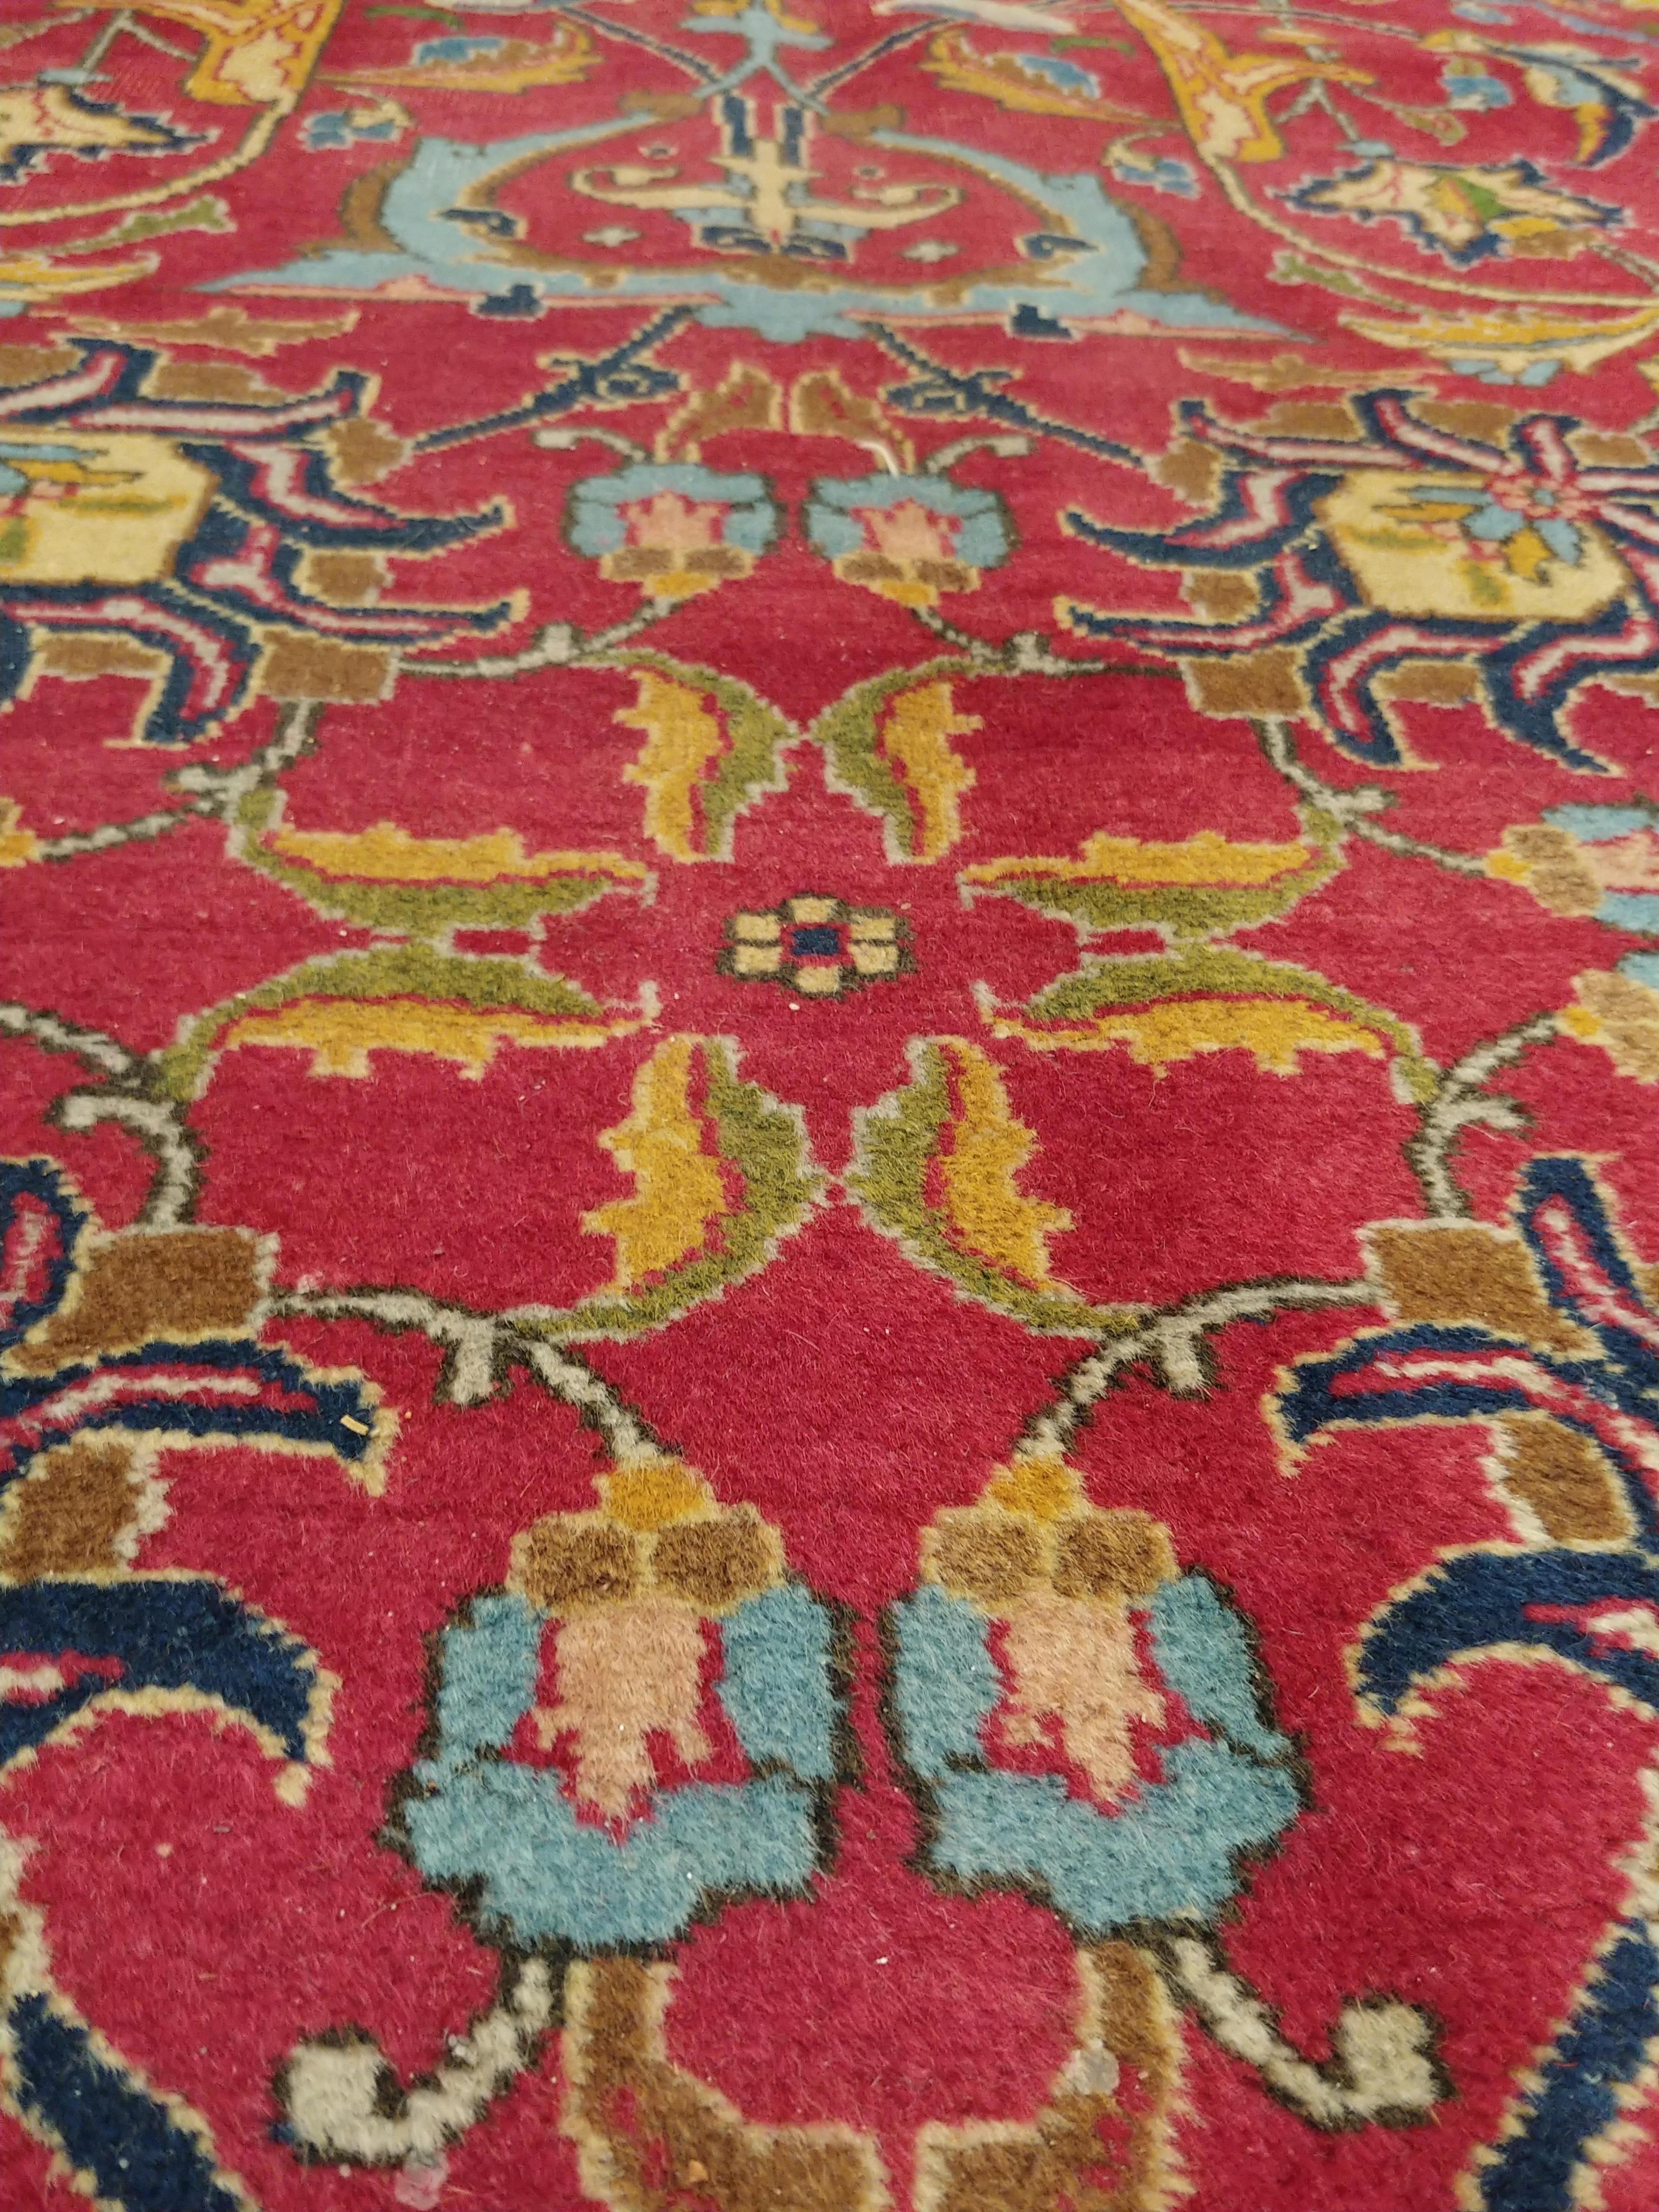 Antique Tabriz Persian Carpet, Handmade Oriental Rug, Red, Caramel, Light Blue 1